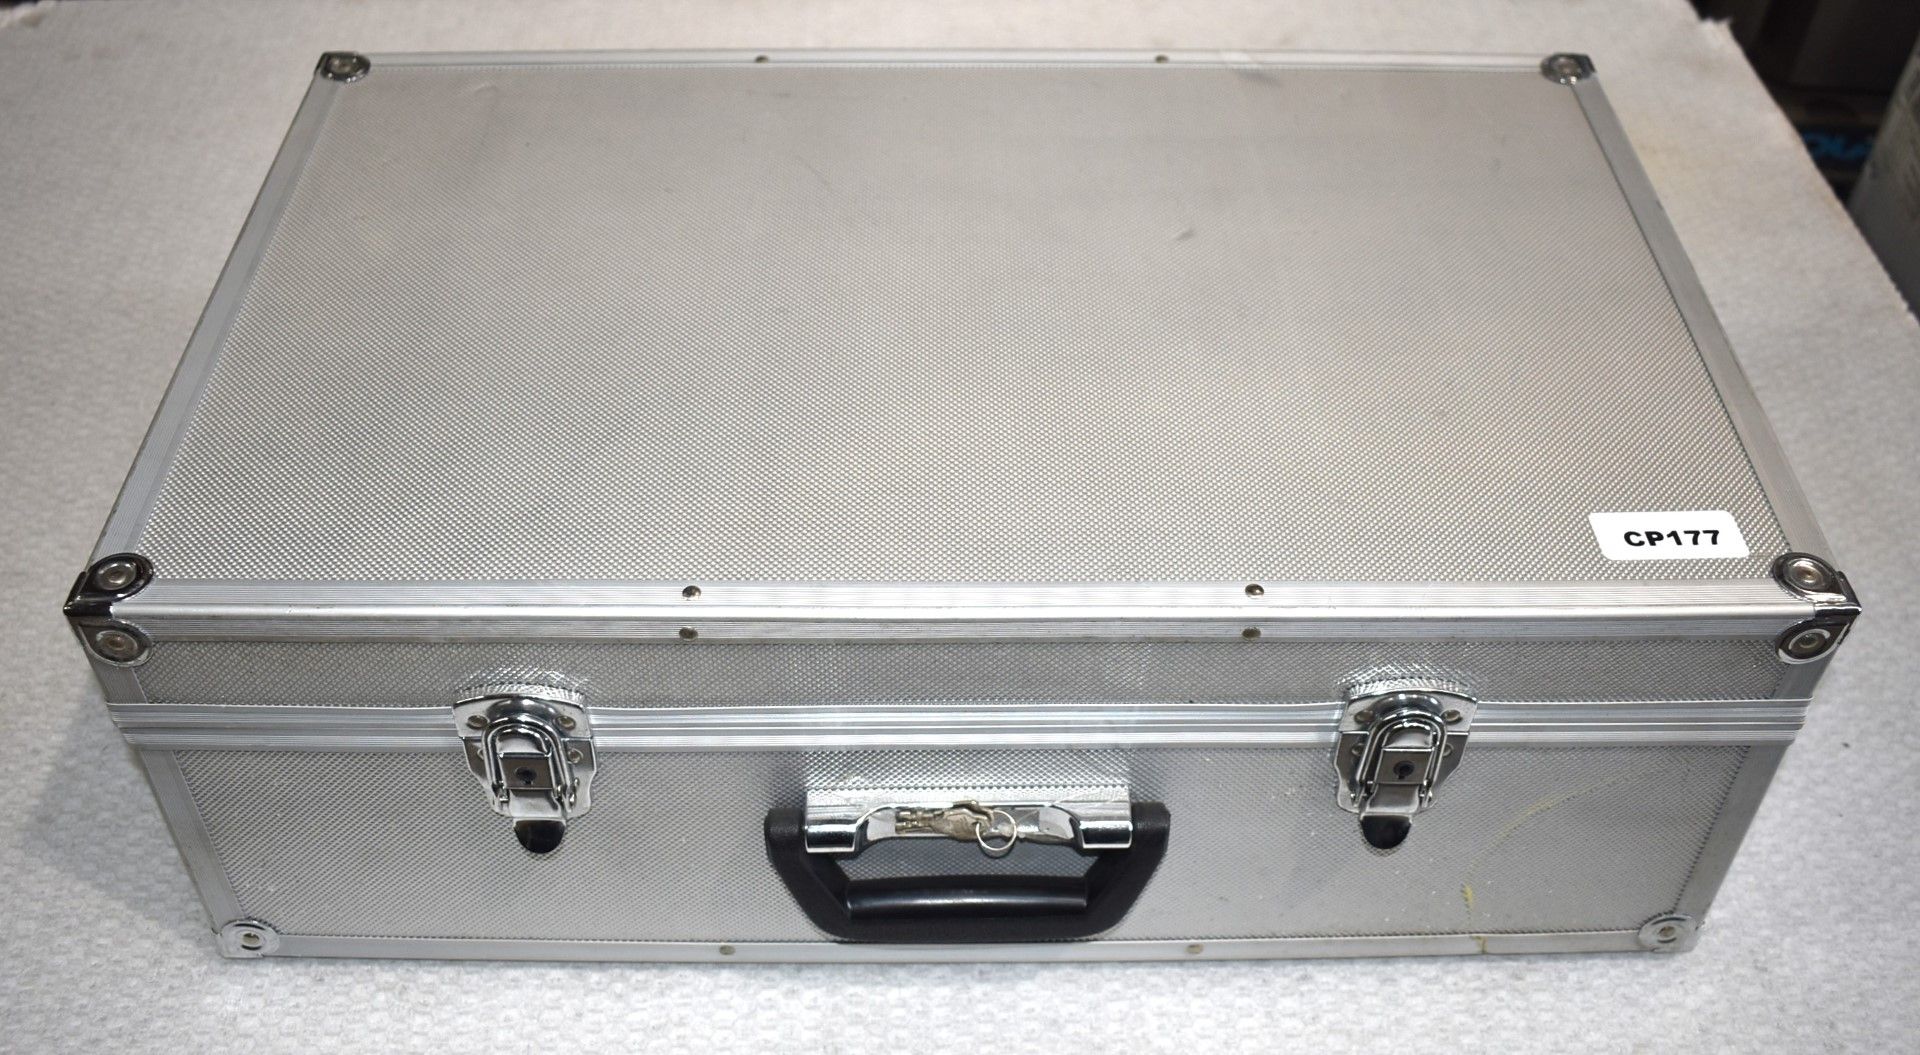 1 x Foam Padded Heavy Duty Transit Case - With Lock and Key - Size: 58 x 35 x 20 cms